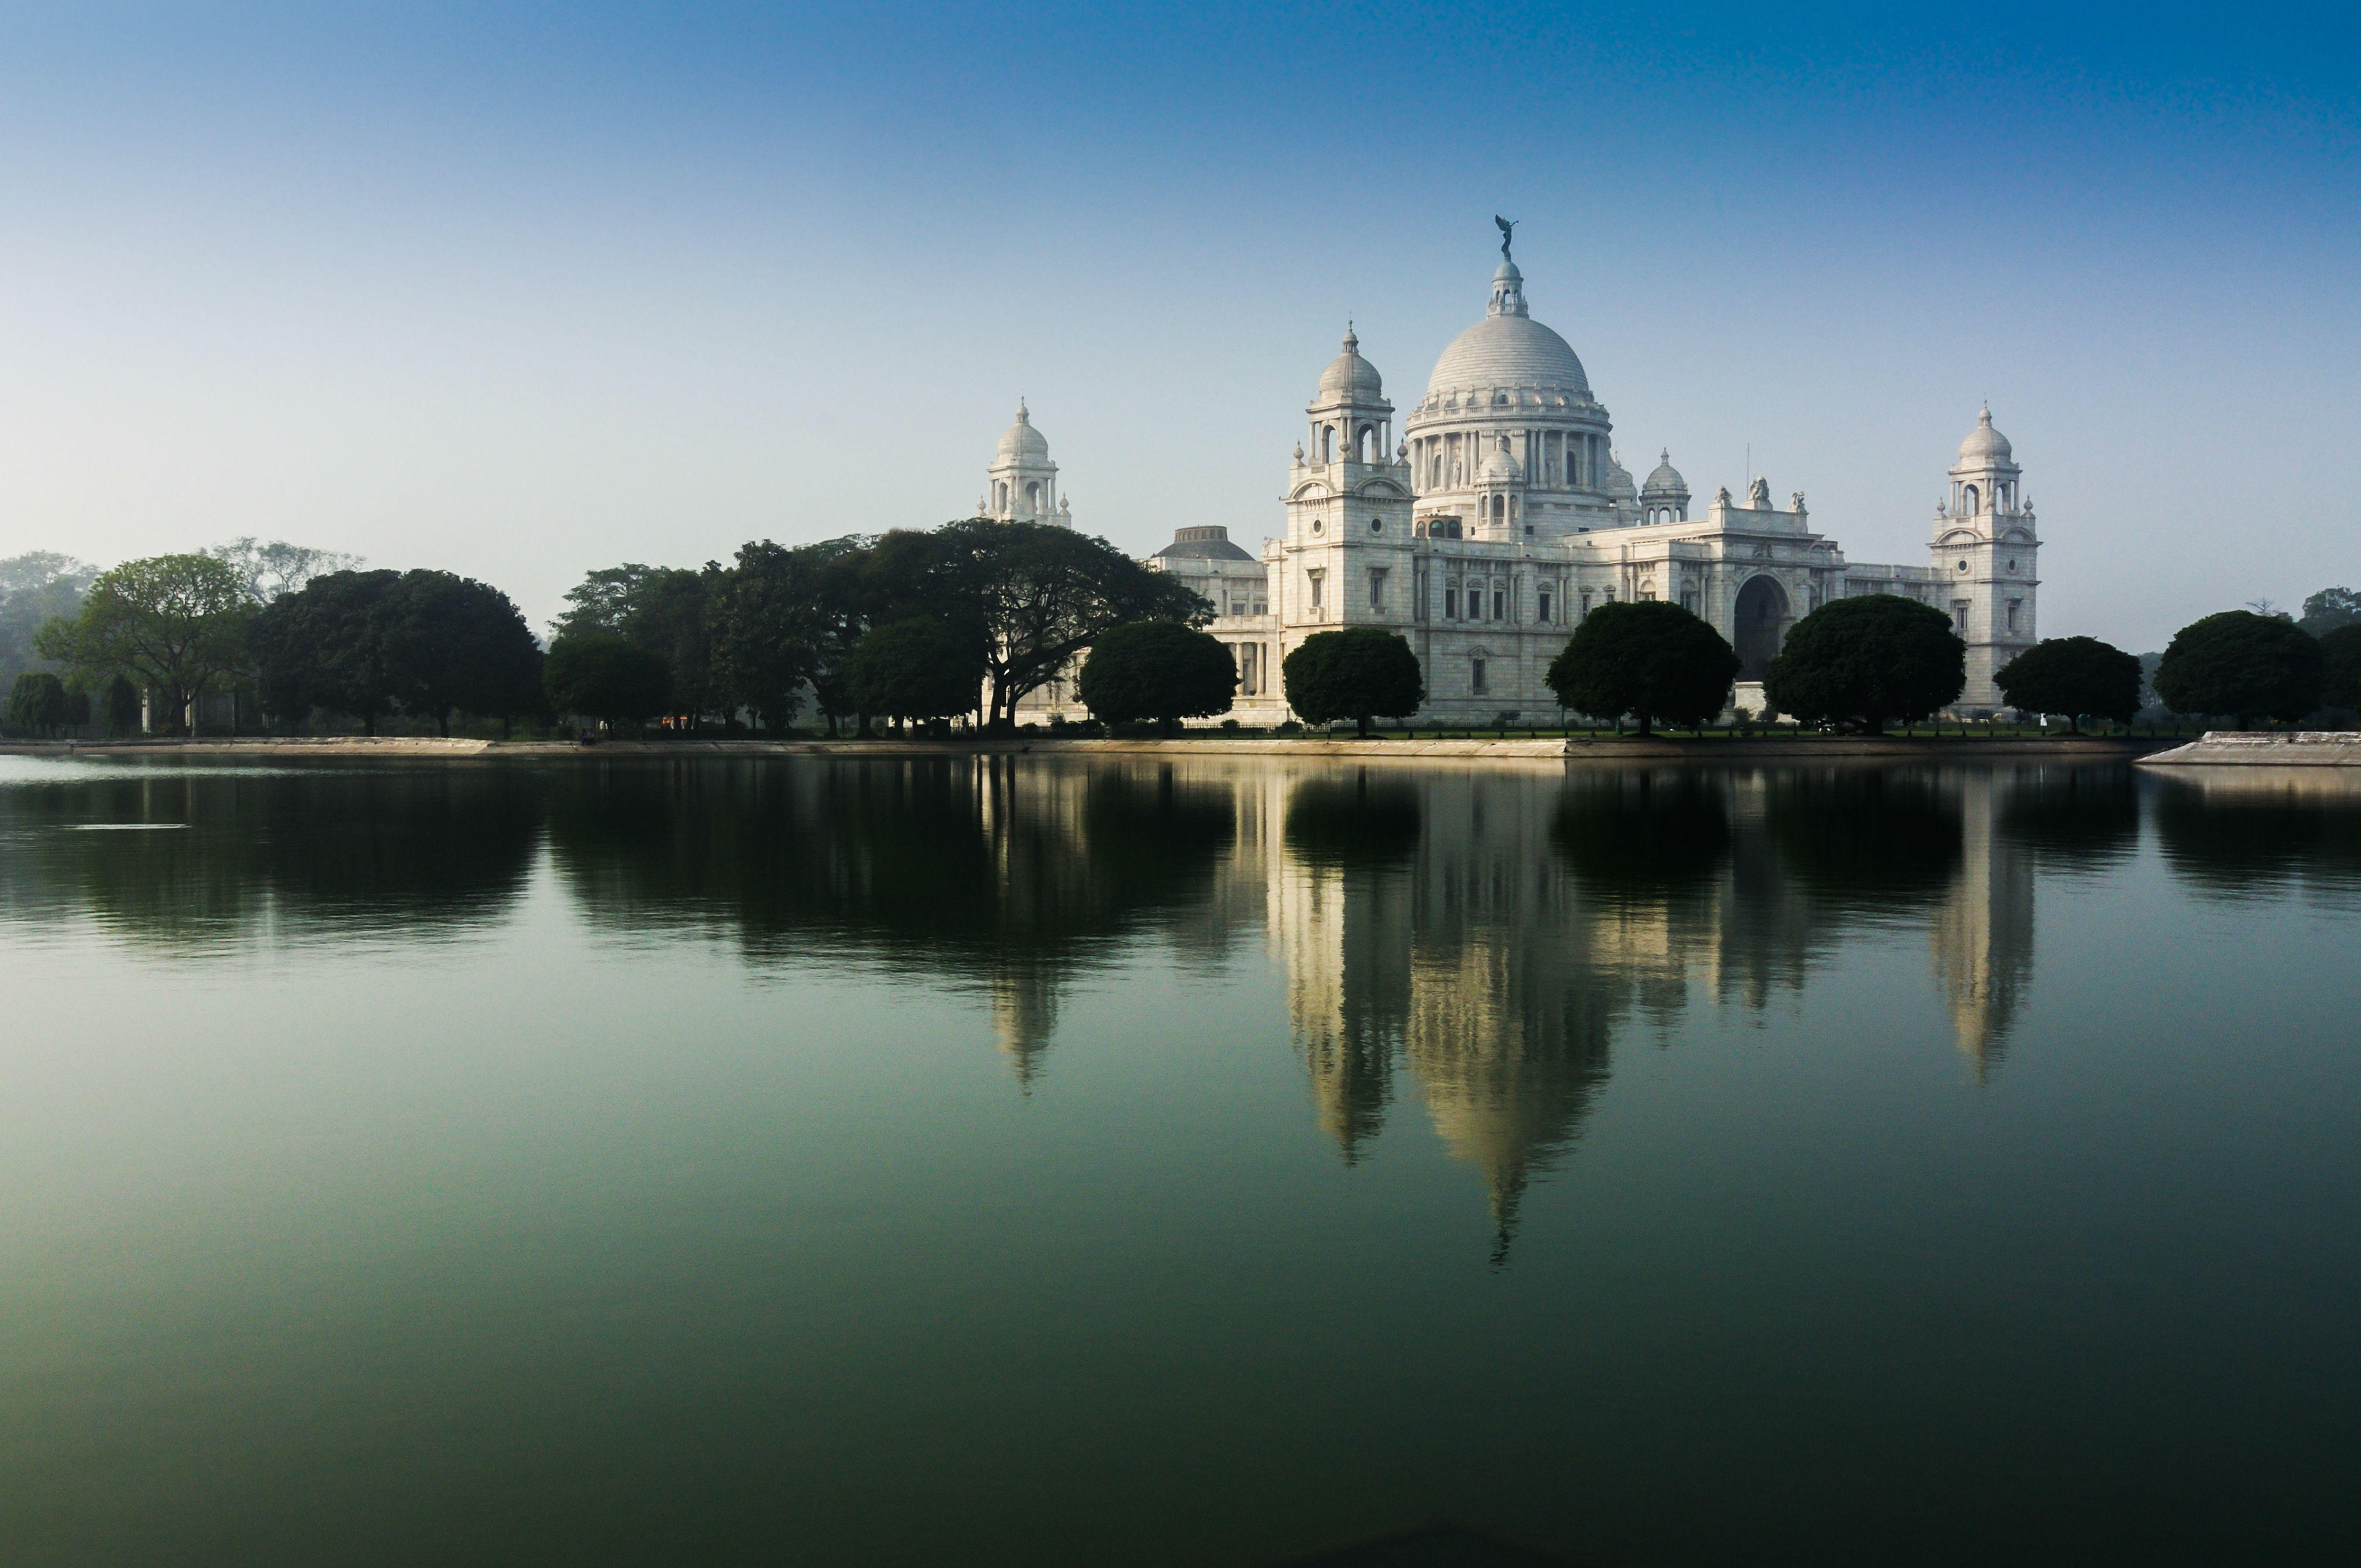 Looking at the Taj Mahal across a body of water.